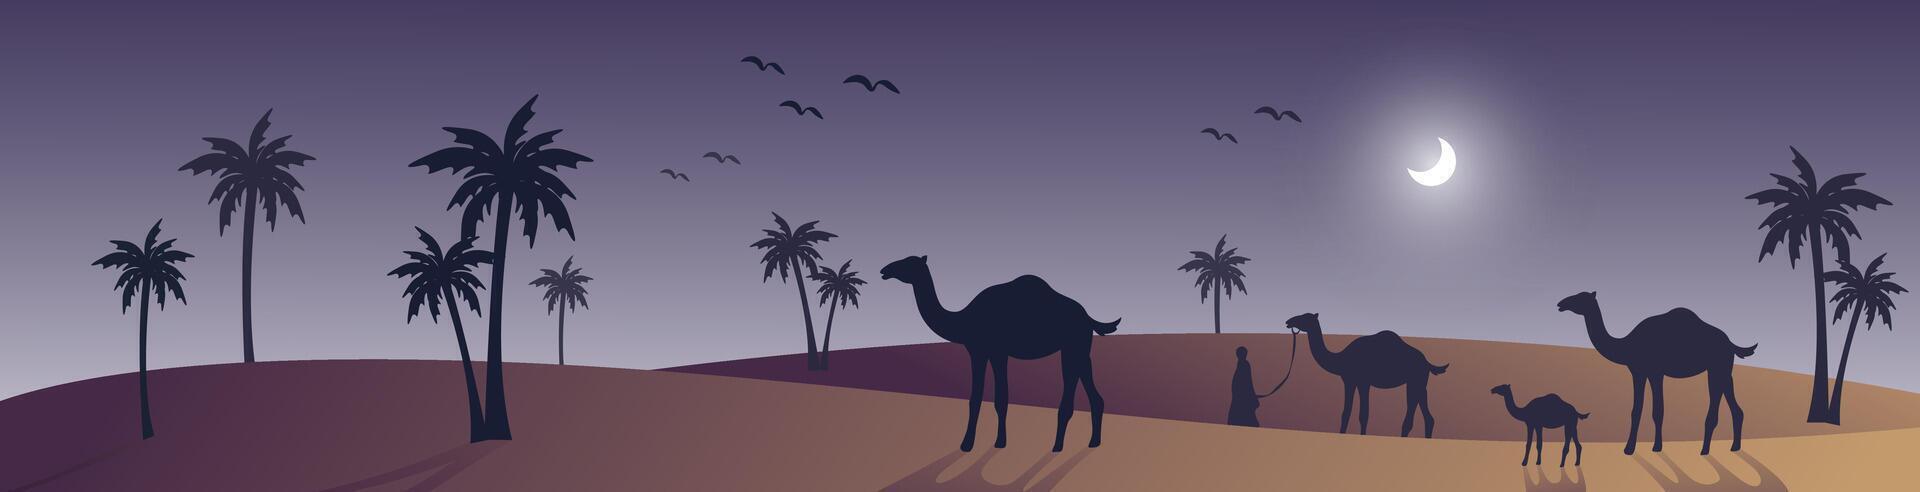 arabesk web horizontaal banier, silhouet kameel en palm boom, mooi maanlicht, nacht visie in woestijn Oppervlakte, Islamitisch achtergrond sjabloon vector